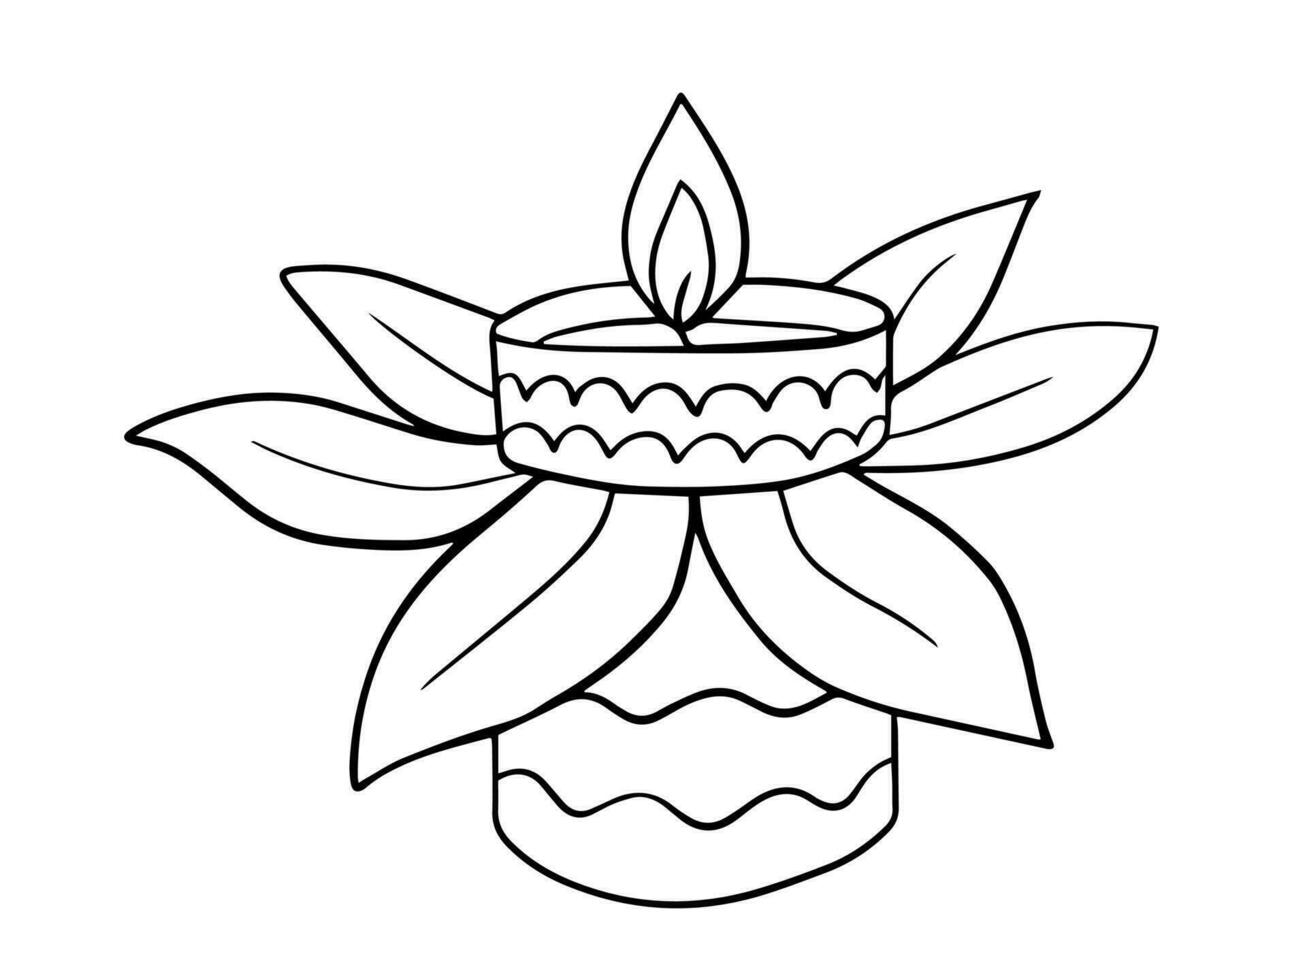 fiore Diwali diya lampada schizzo. vettore mano disegnato Diwali lampada saluto carta